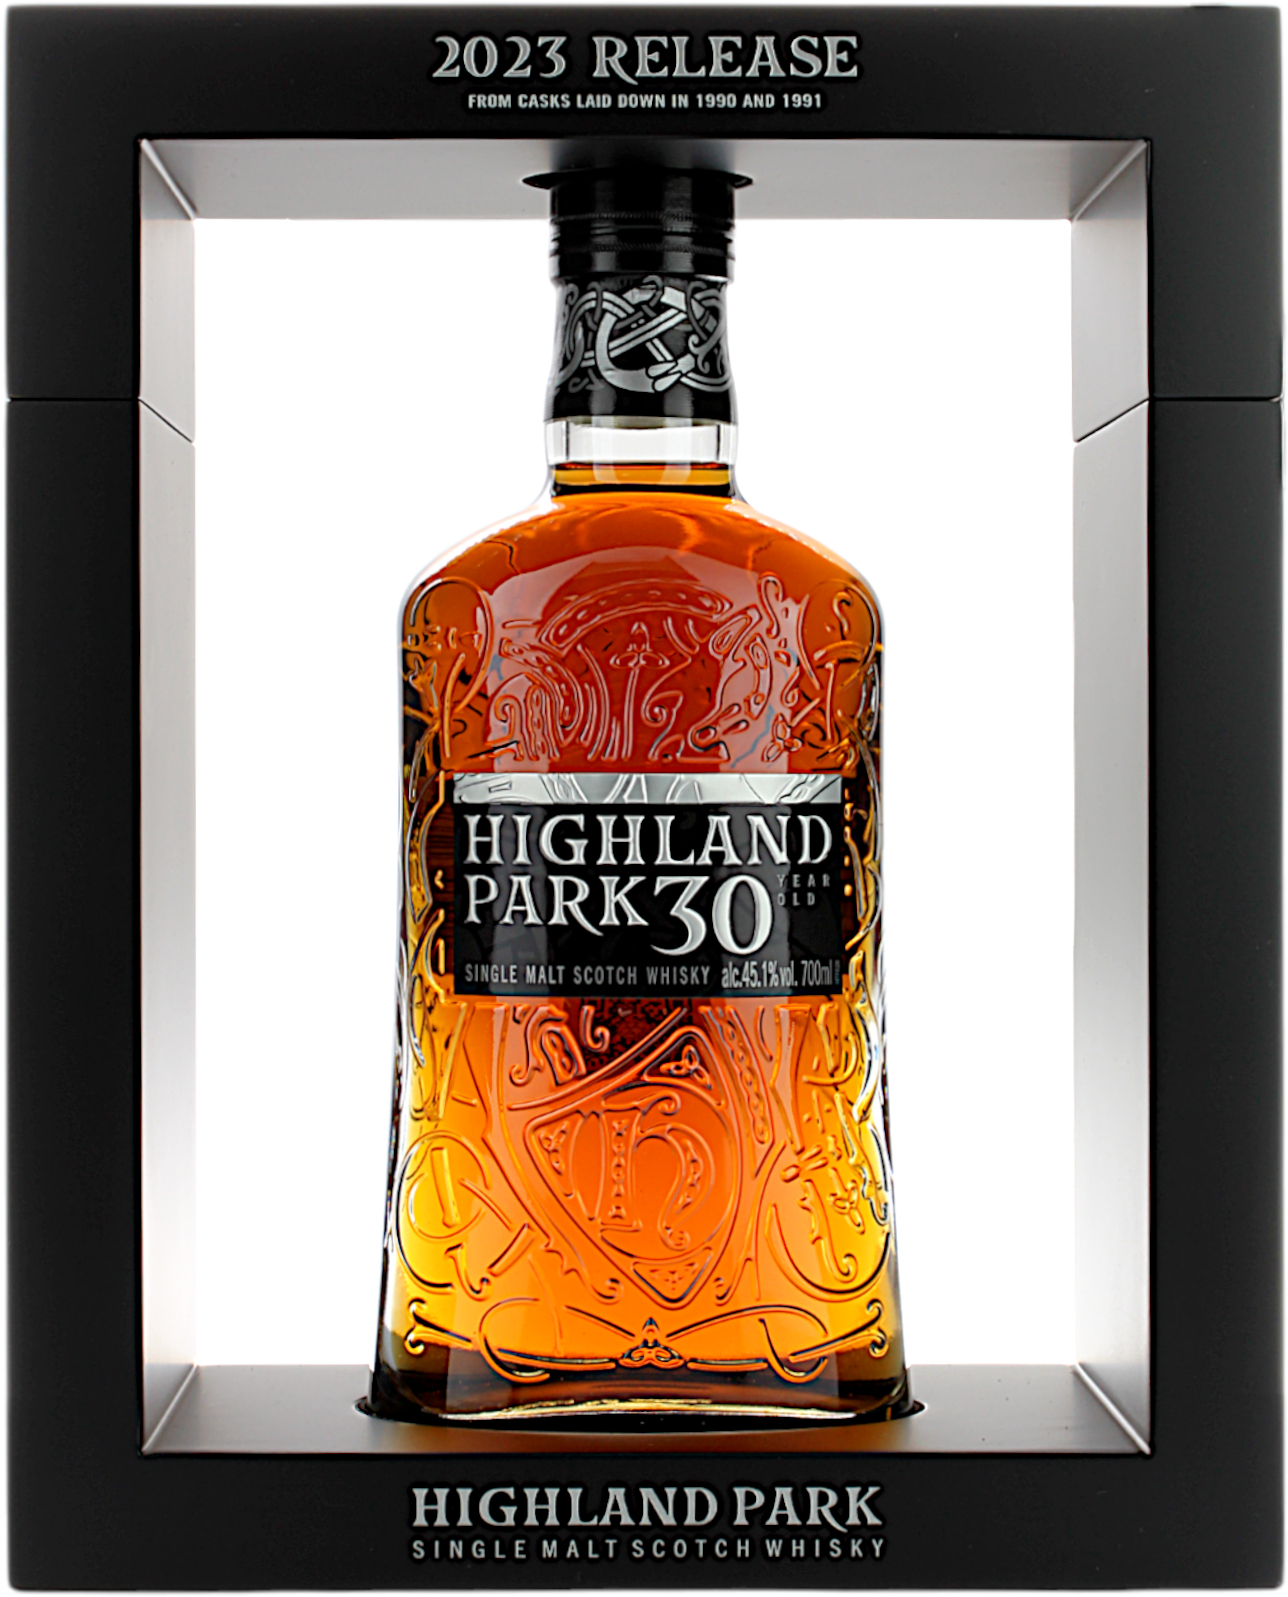 Highland Park 30 Jahre 2023 Release 45.1% 0,7l